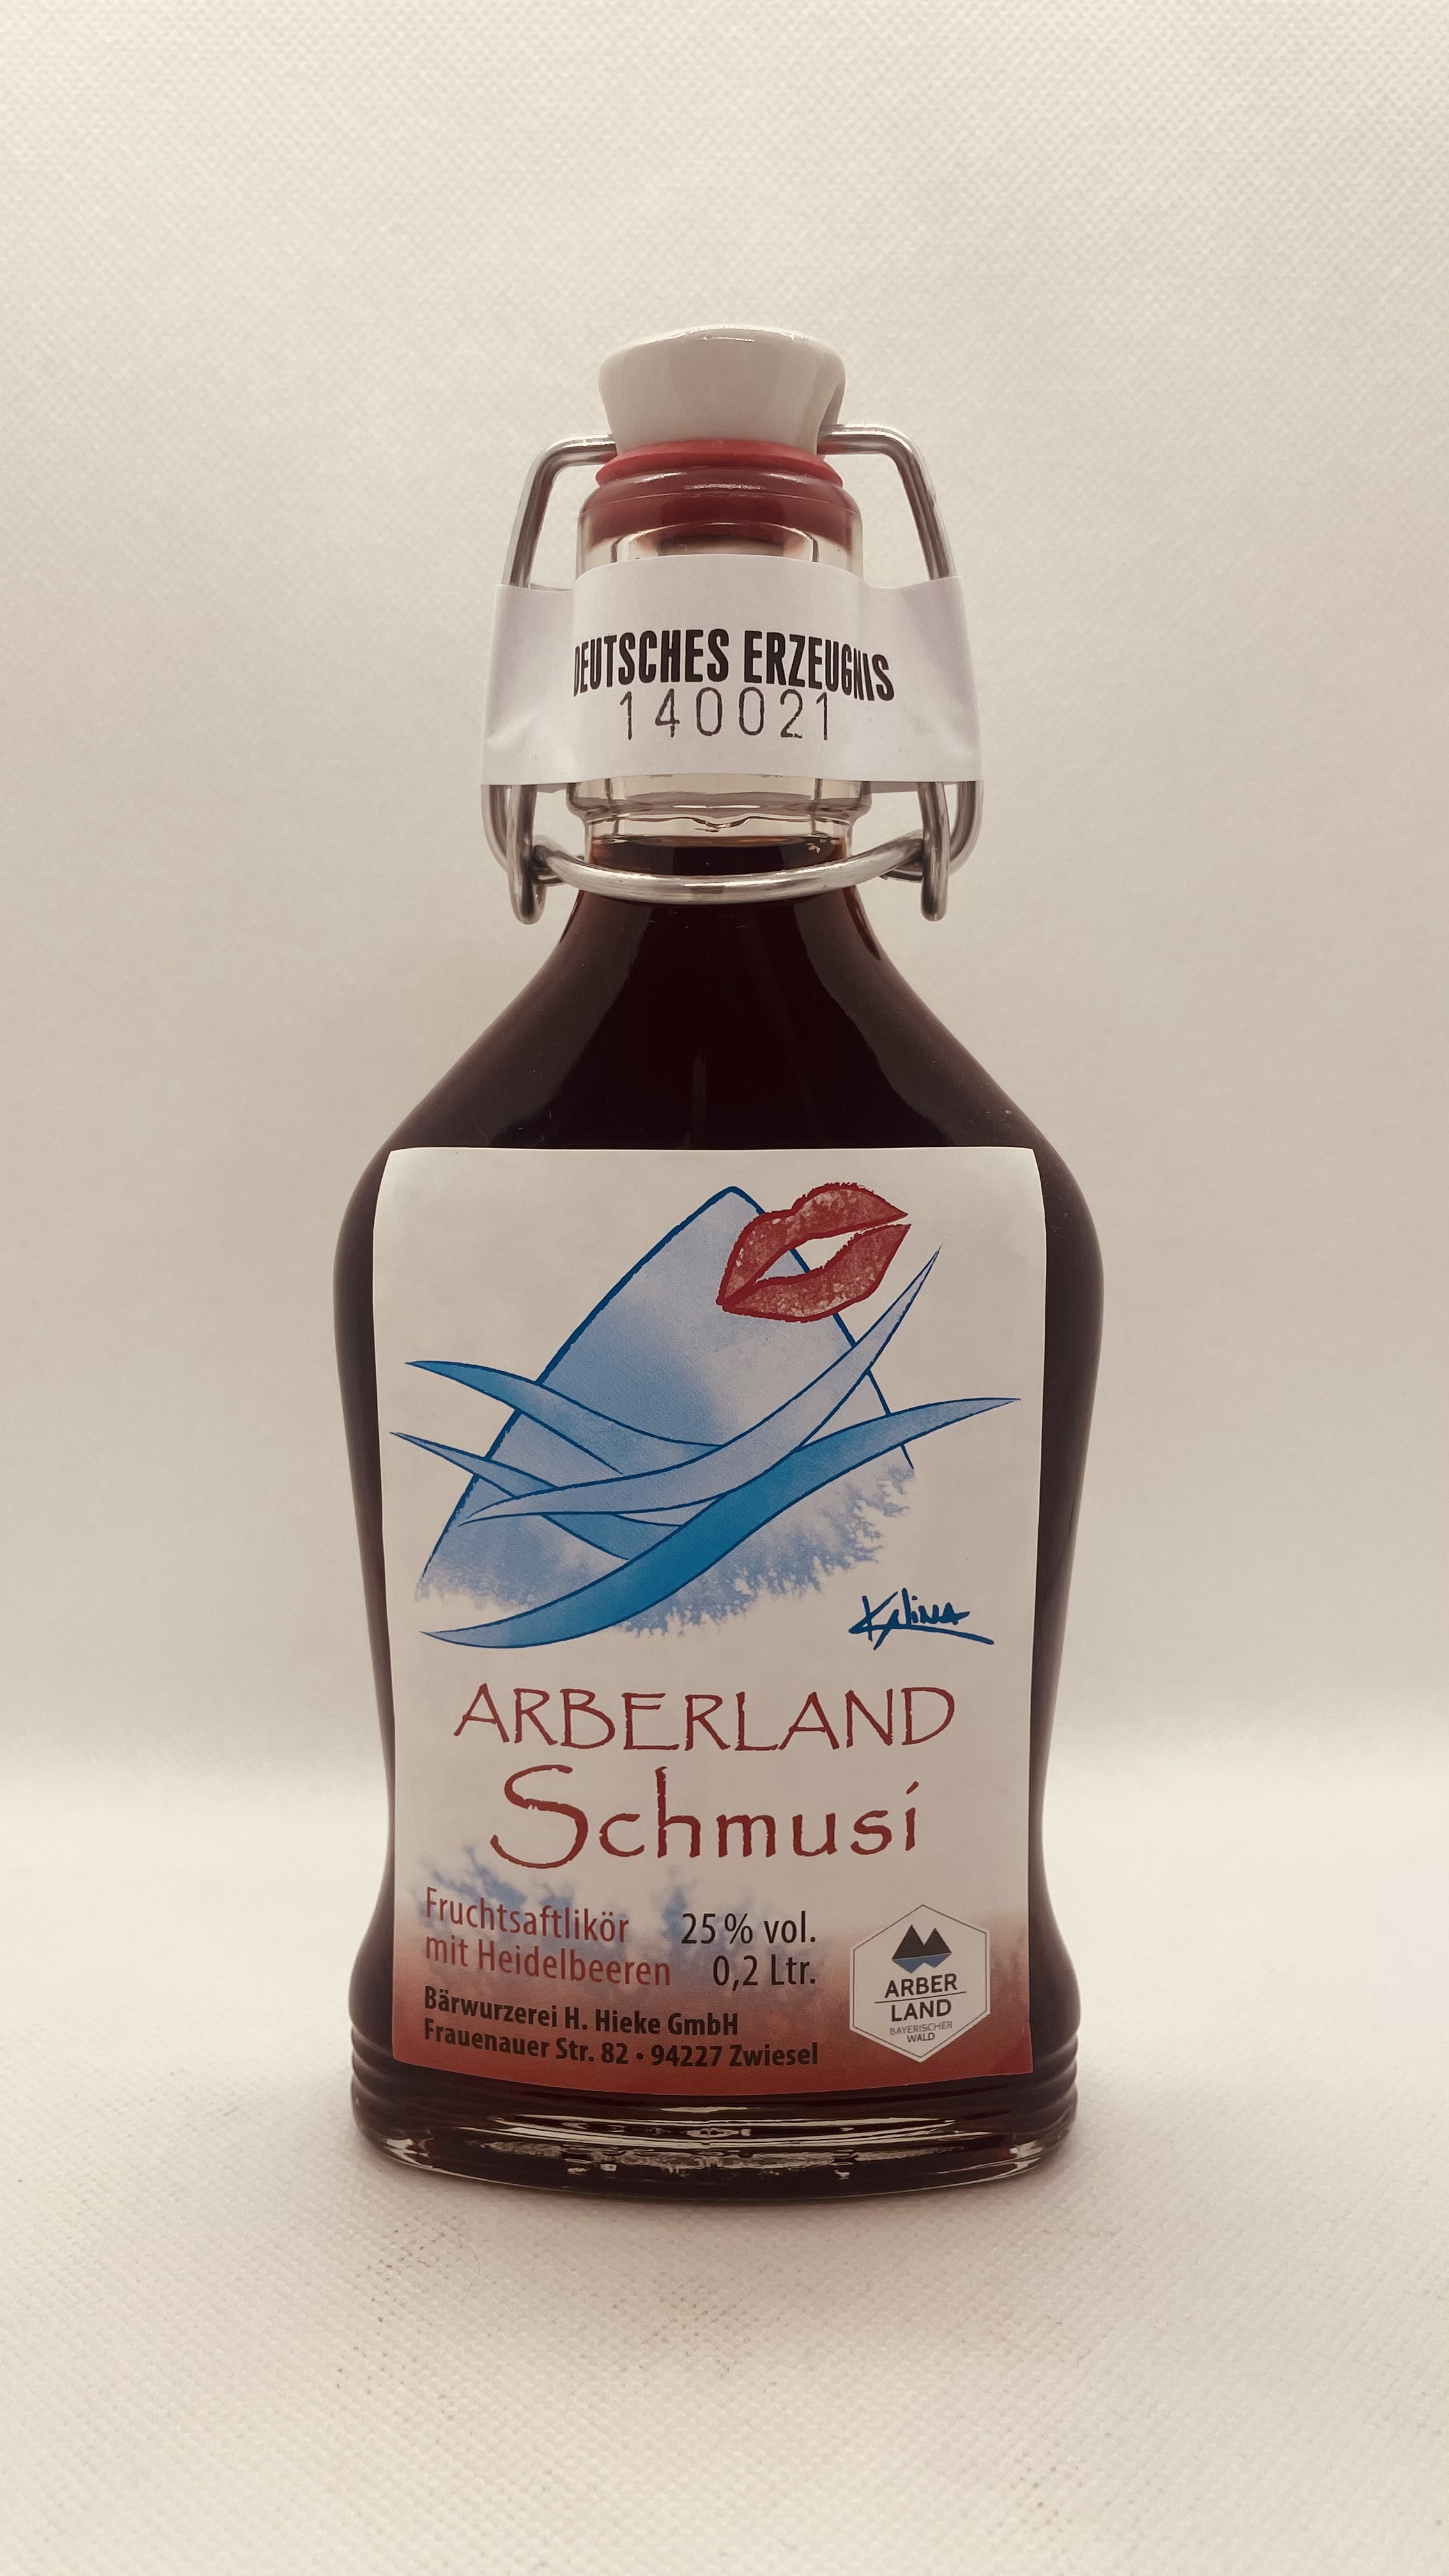 ARBERLAND Schmusi 0,2 ltr. (Fruchtsaftlikör mit Heidelbeeren). Foto: ARBERLAND REGio GmbH.